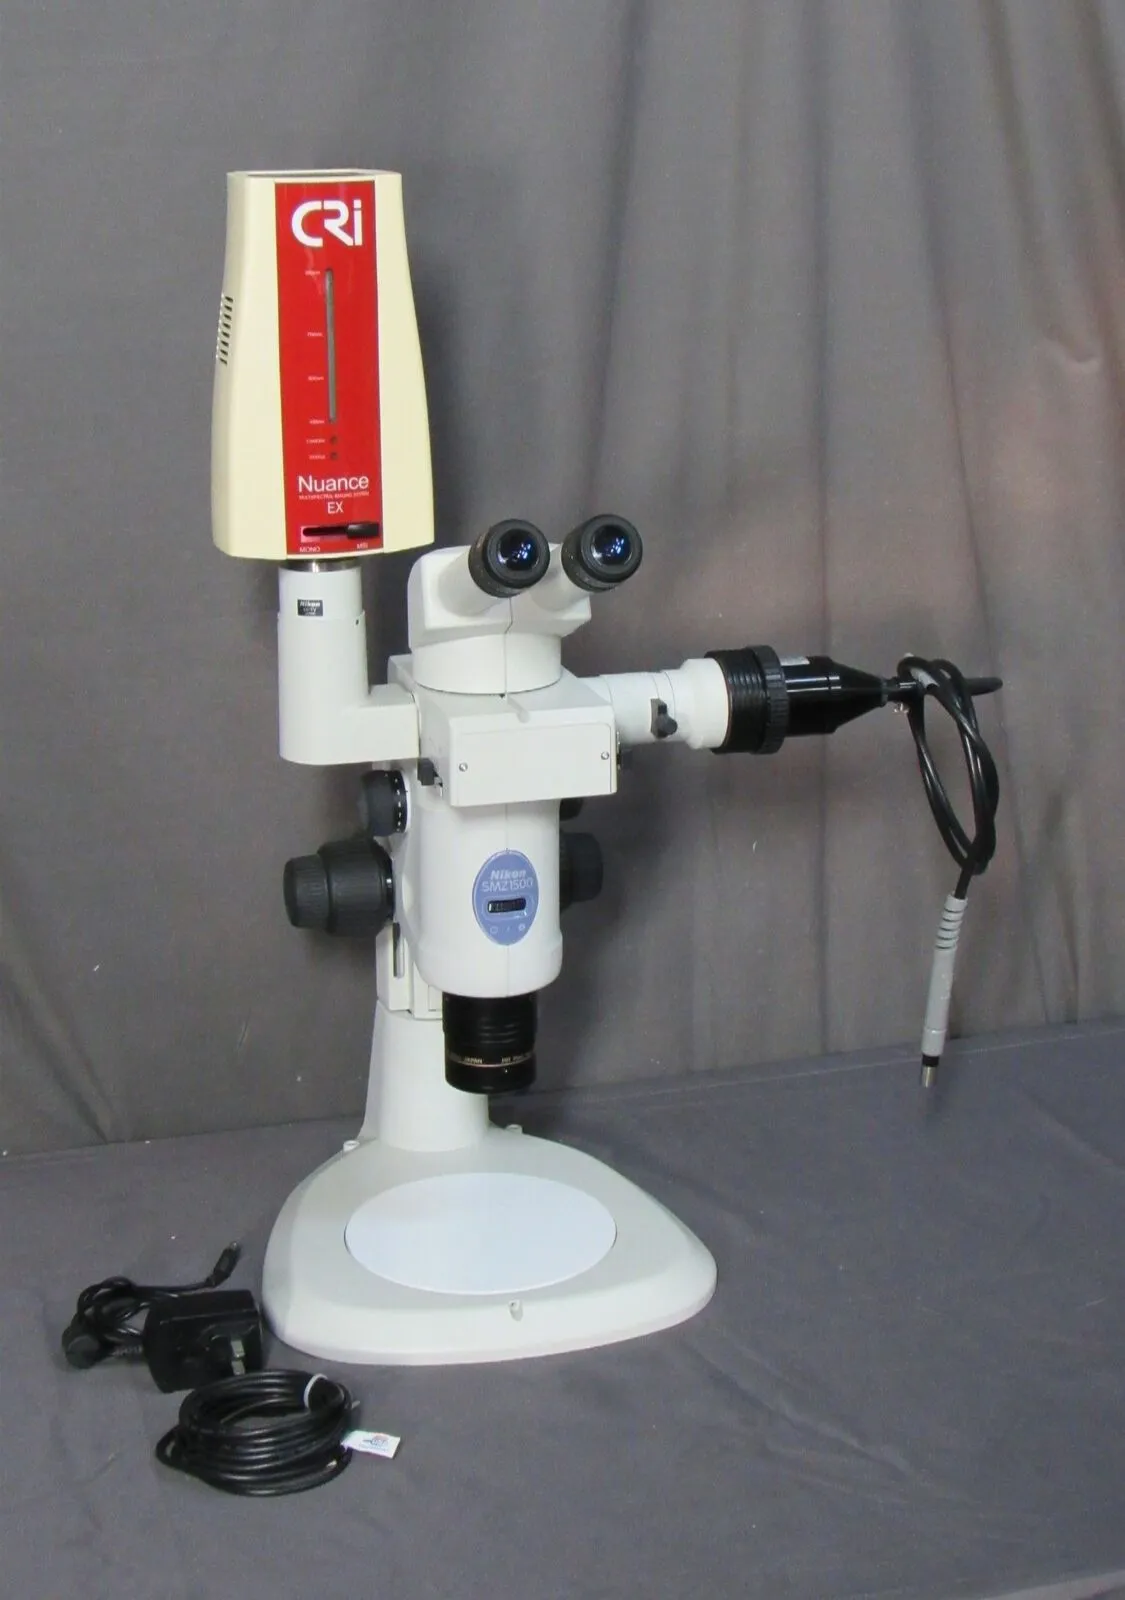 NIKON SMZ1500 Microscope & Perkin Elmer/Revvity NUANCE EX Multispectral Imager